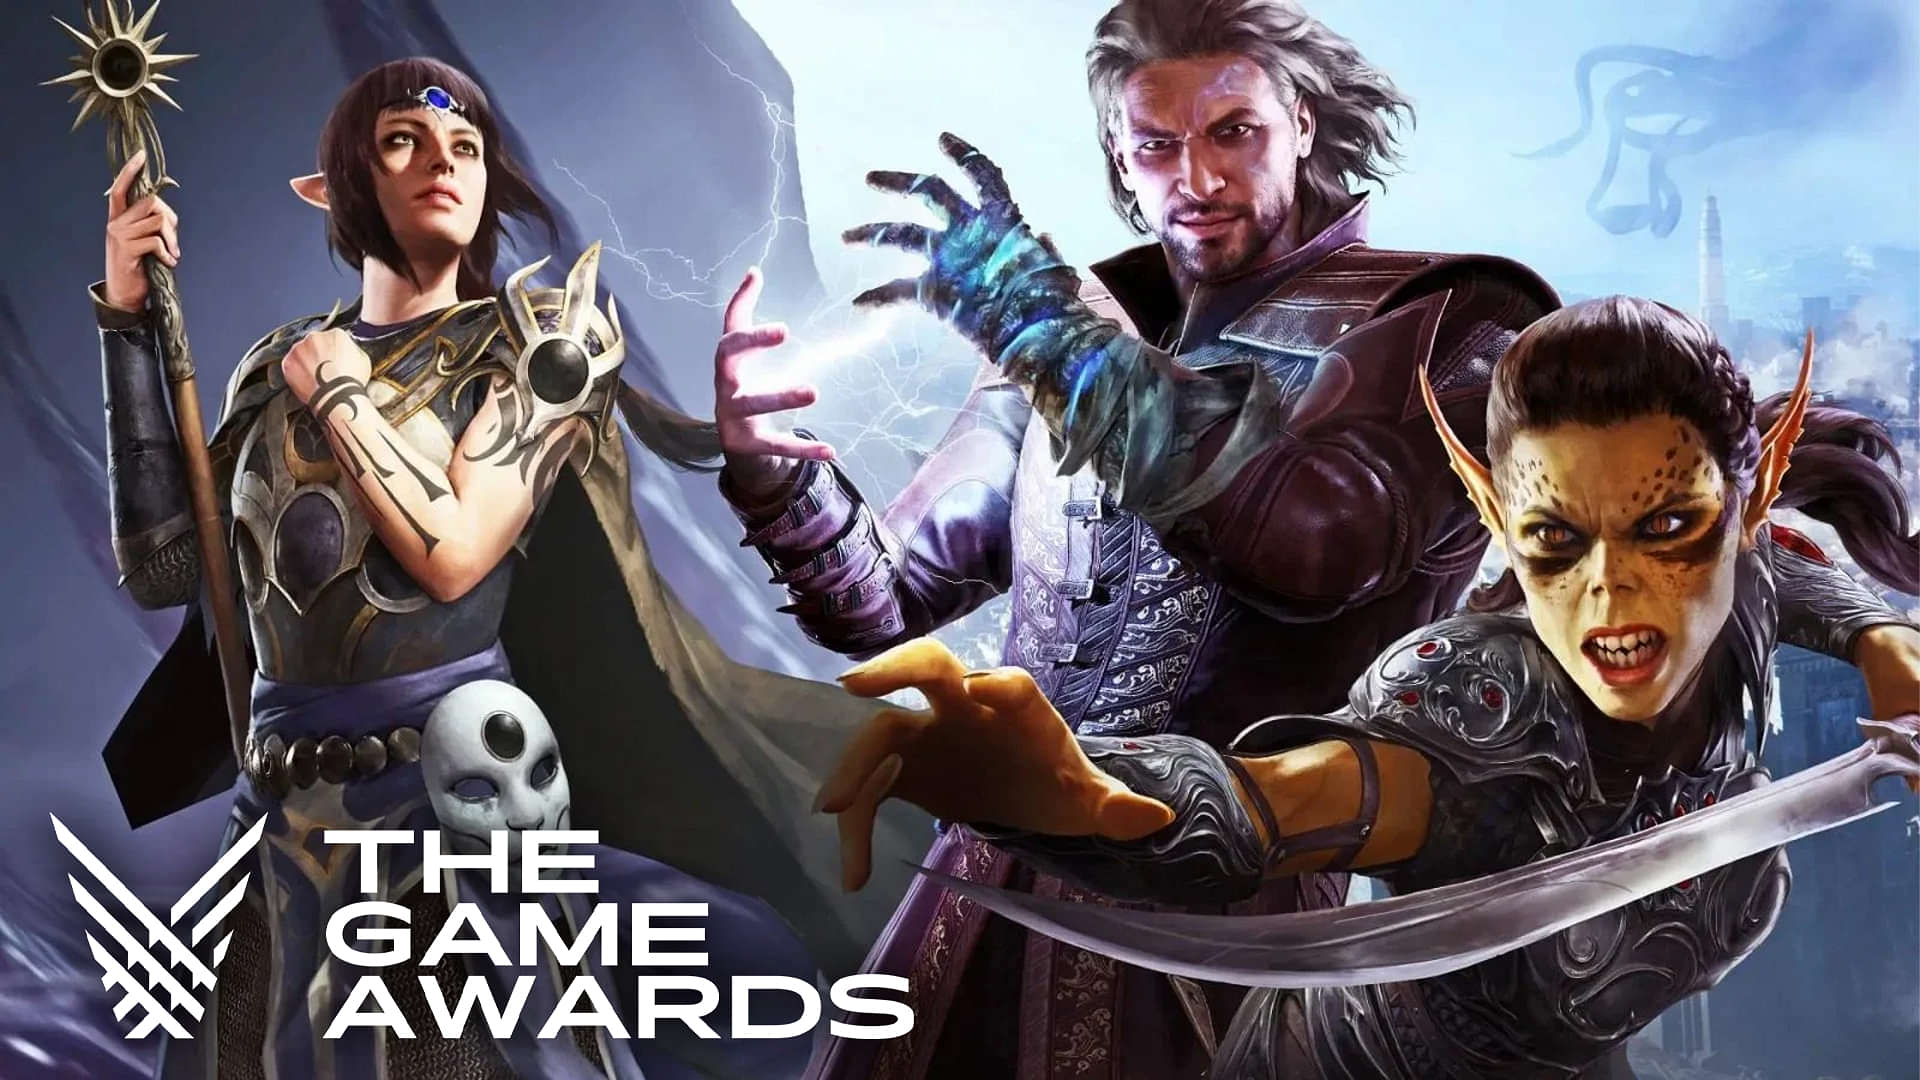 GOTY went to Baldur's Gate 3! THE GAME AWARDS 2023 Awards